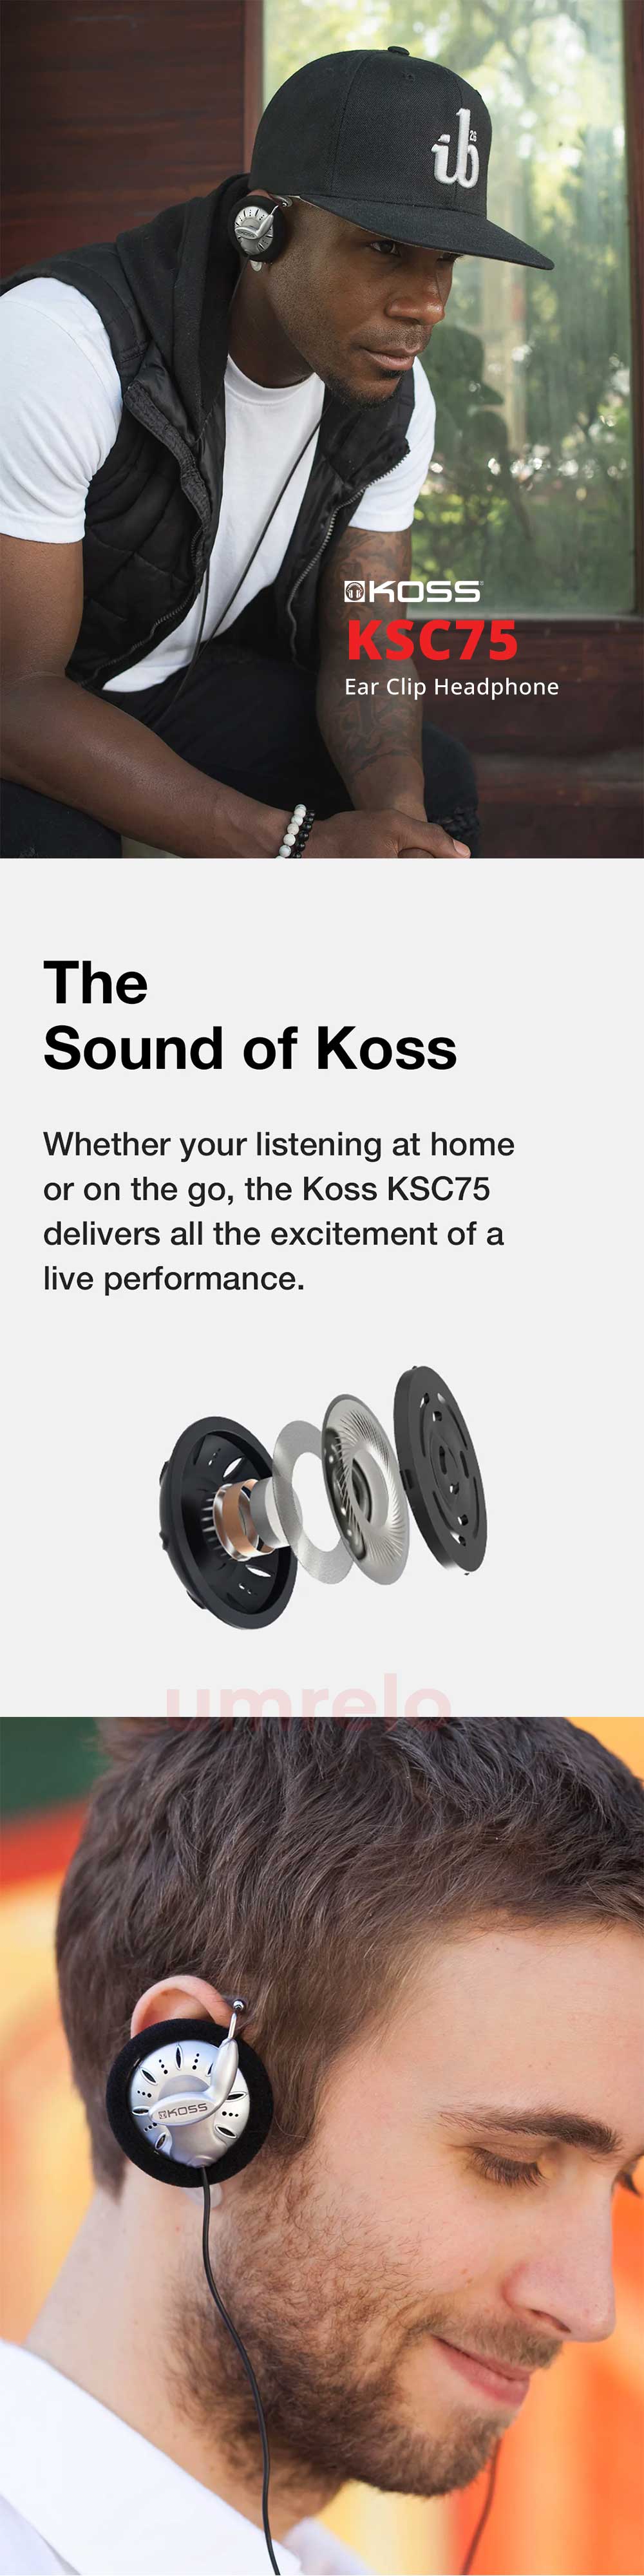 KOSS KSC75 Ear Clip Headphone 2